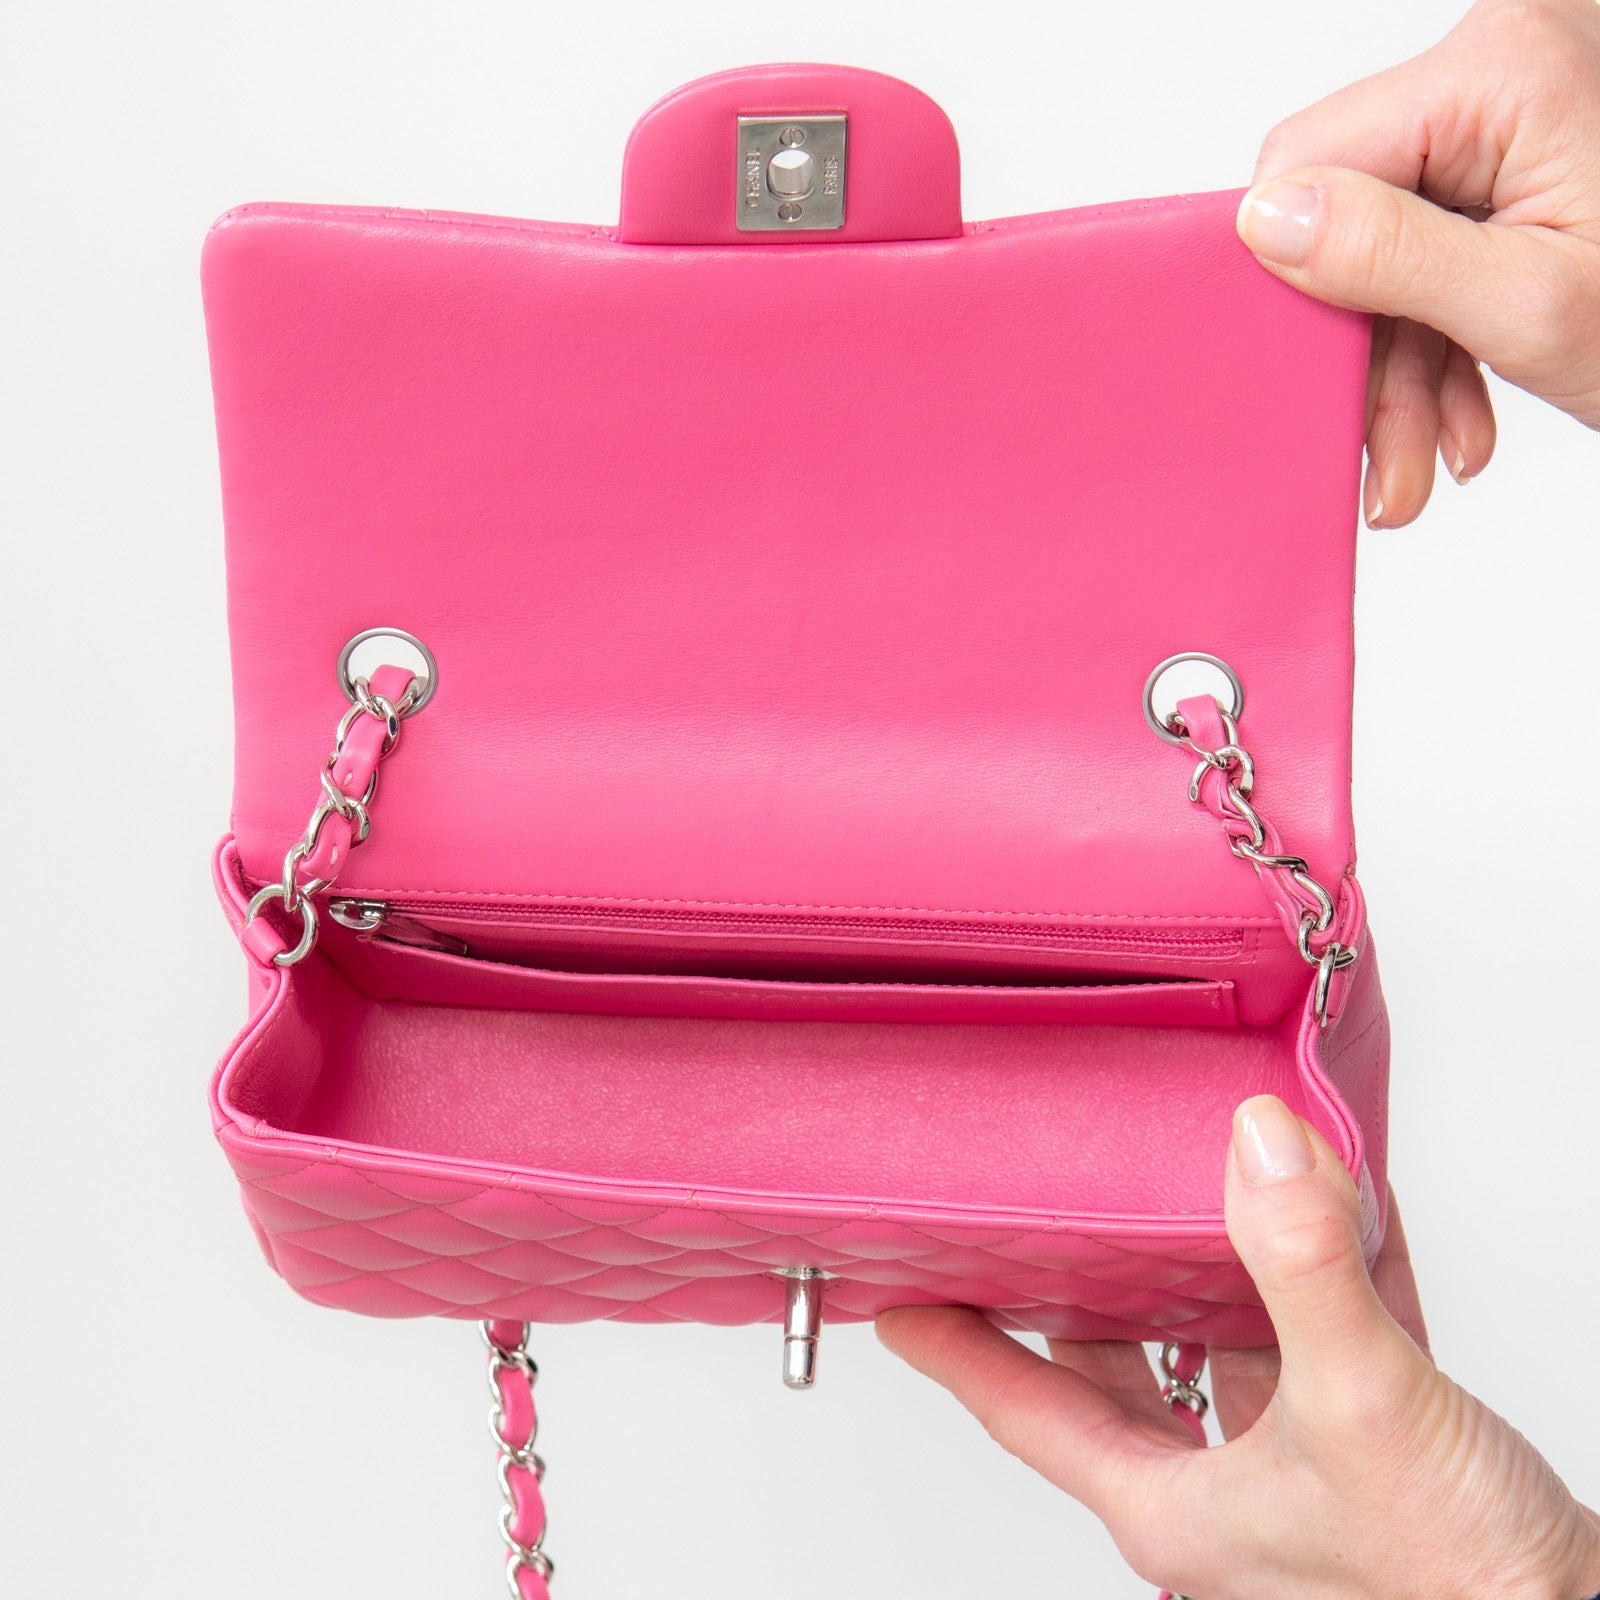 Chanel Pink Mini Rectangular Flap Bag - Image 7 of 13